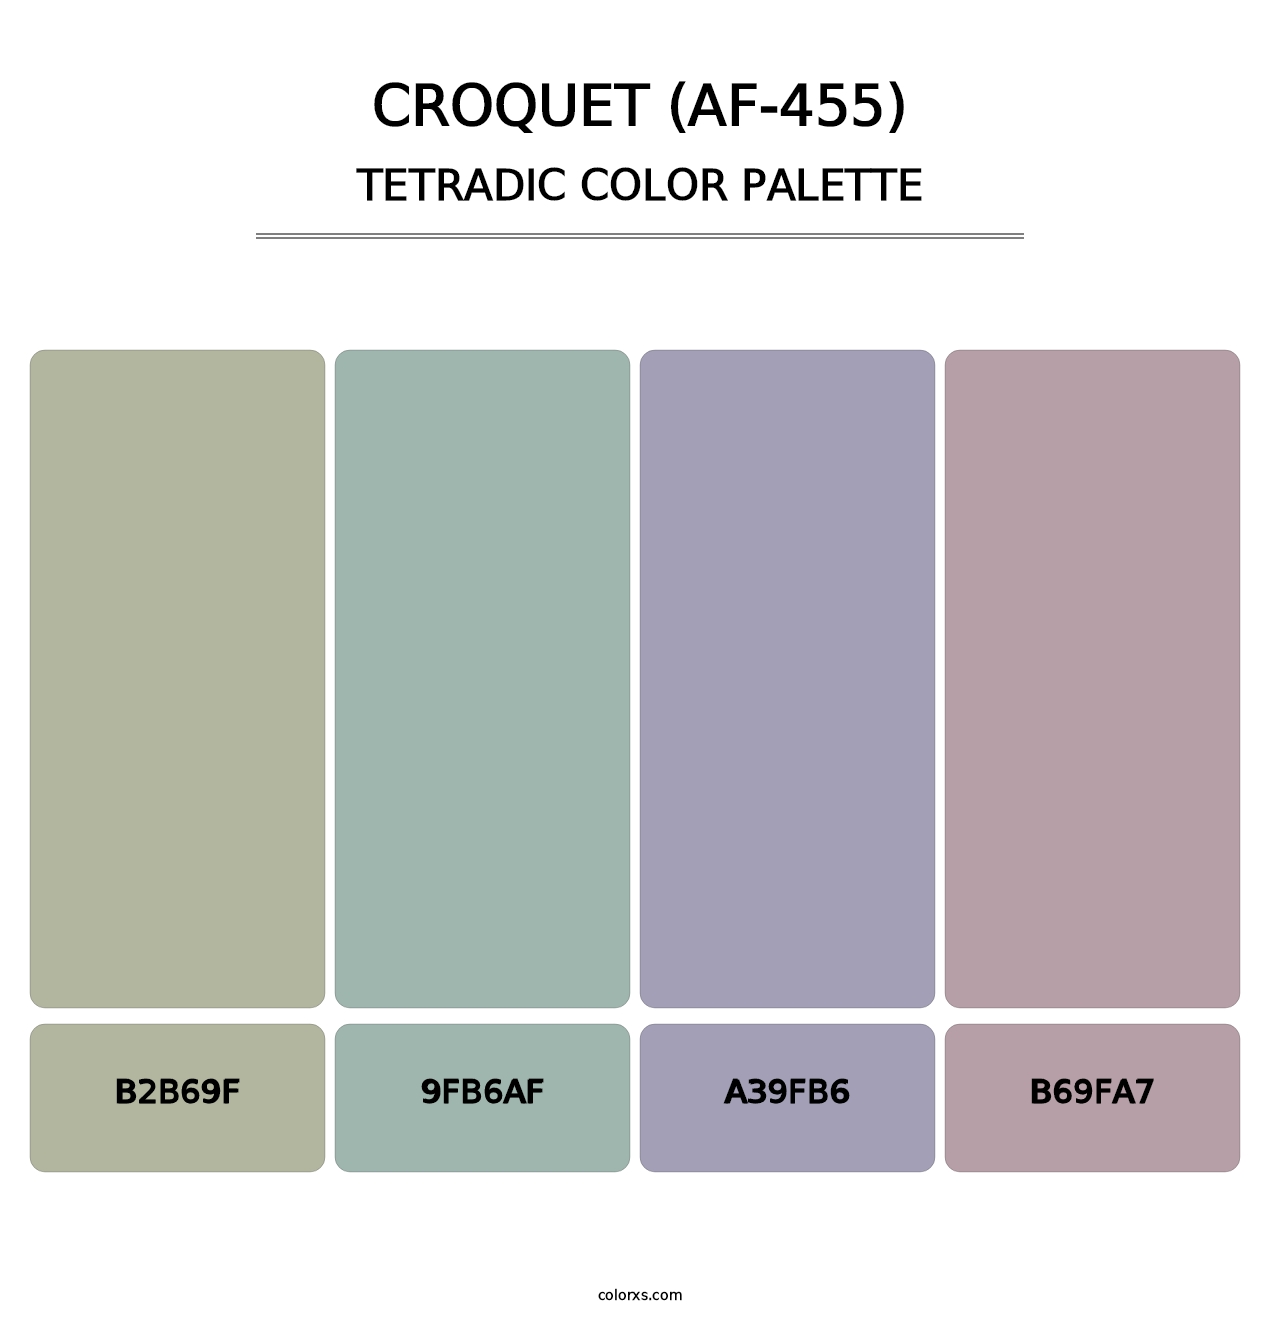 Croquet (AF-455) - Tetradic Color Palette